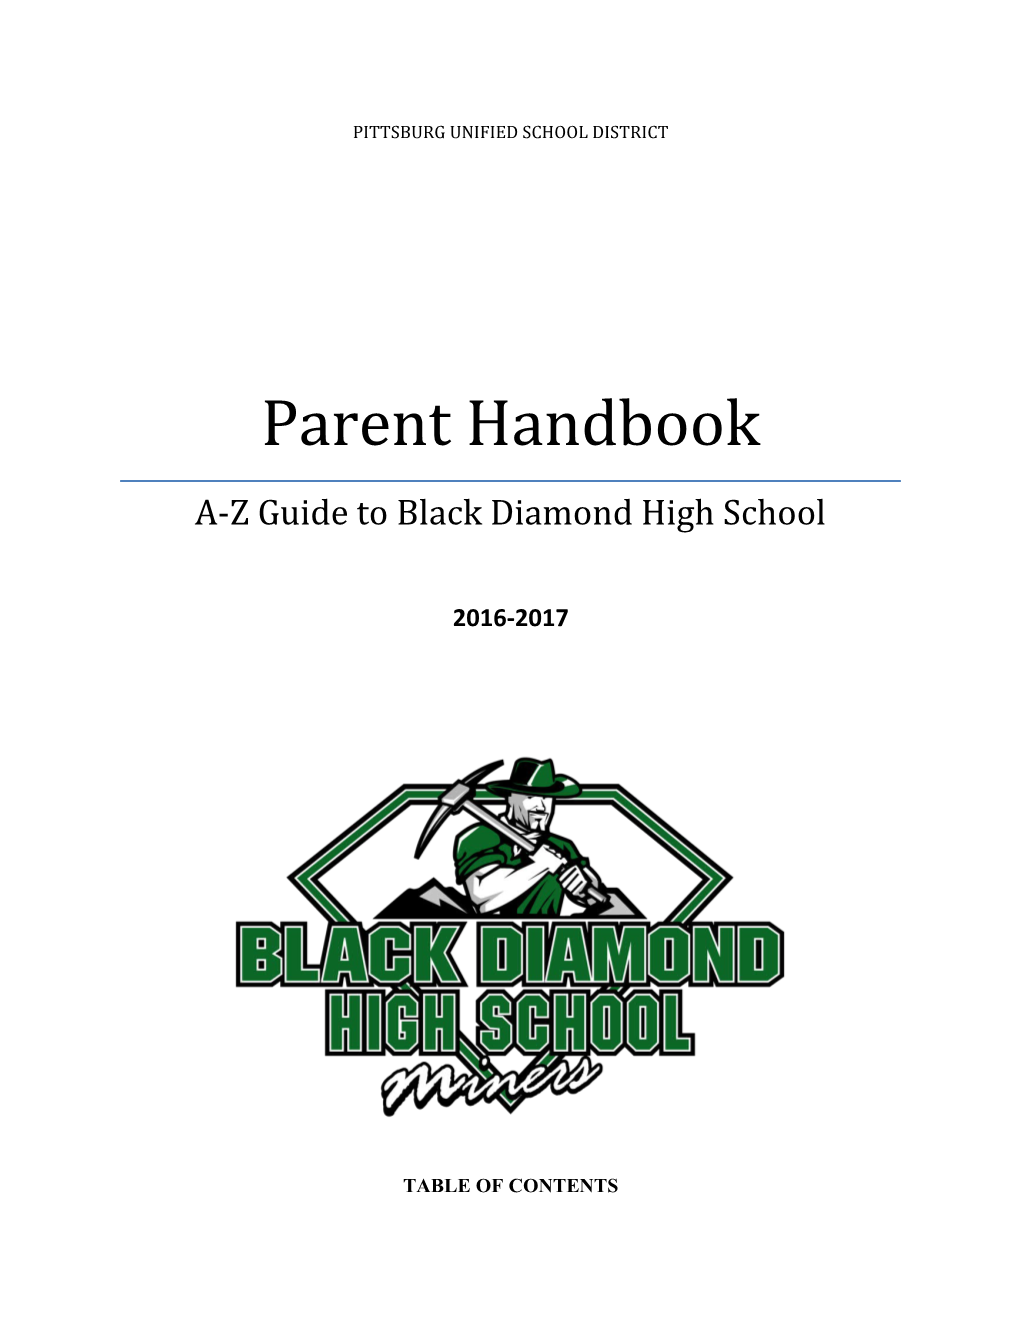 Black Diamond High School Mission & Vision Statementpage 3